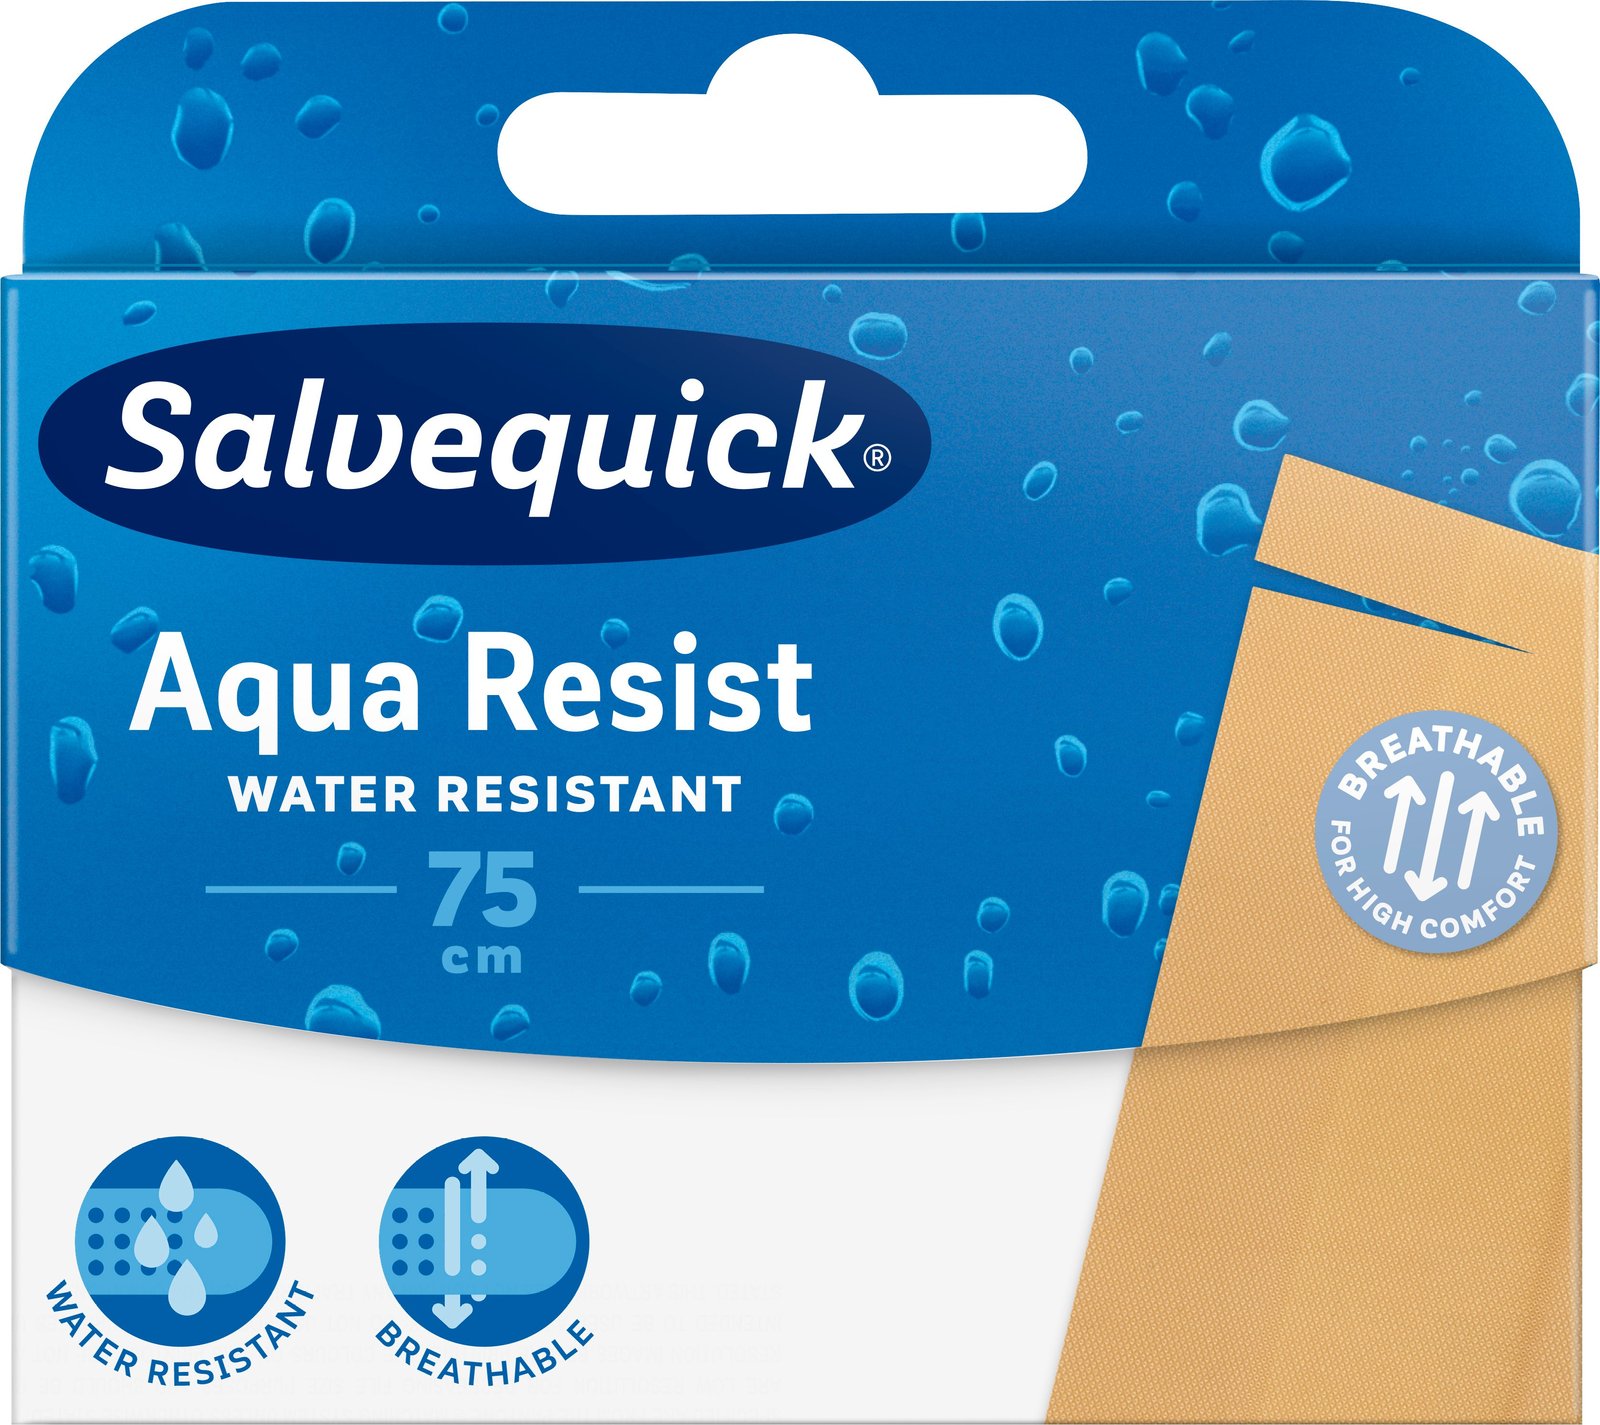 Salvequick Aqua resist 75 cm